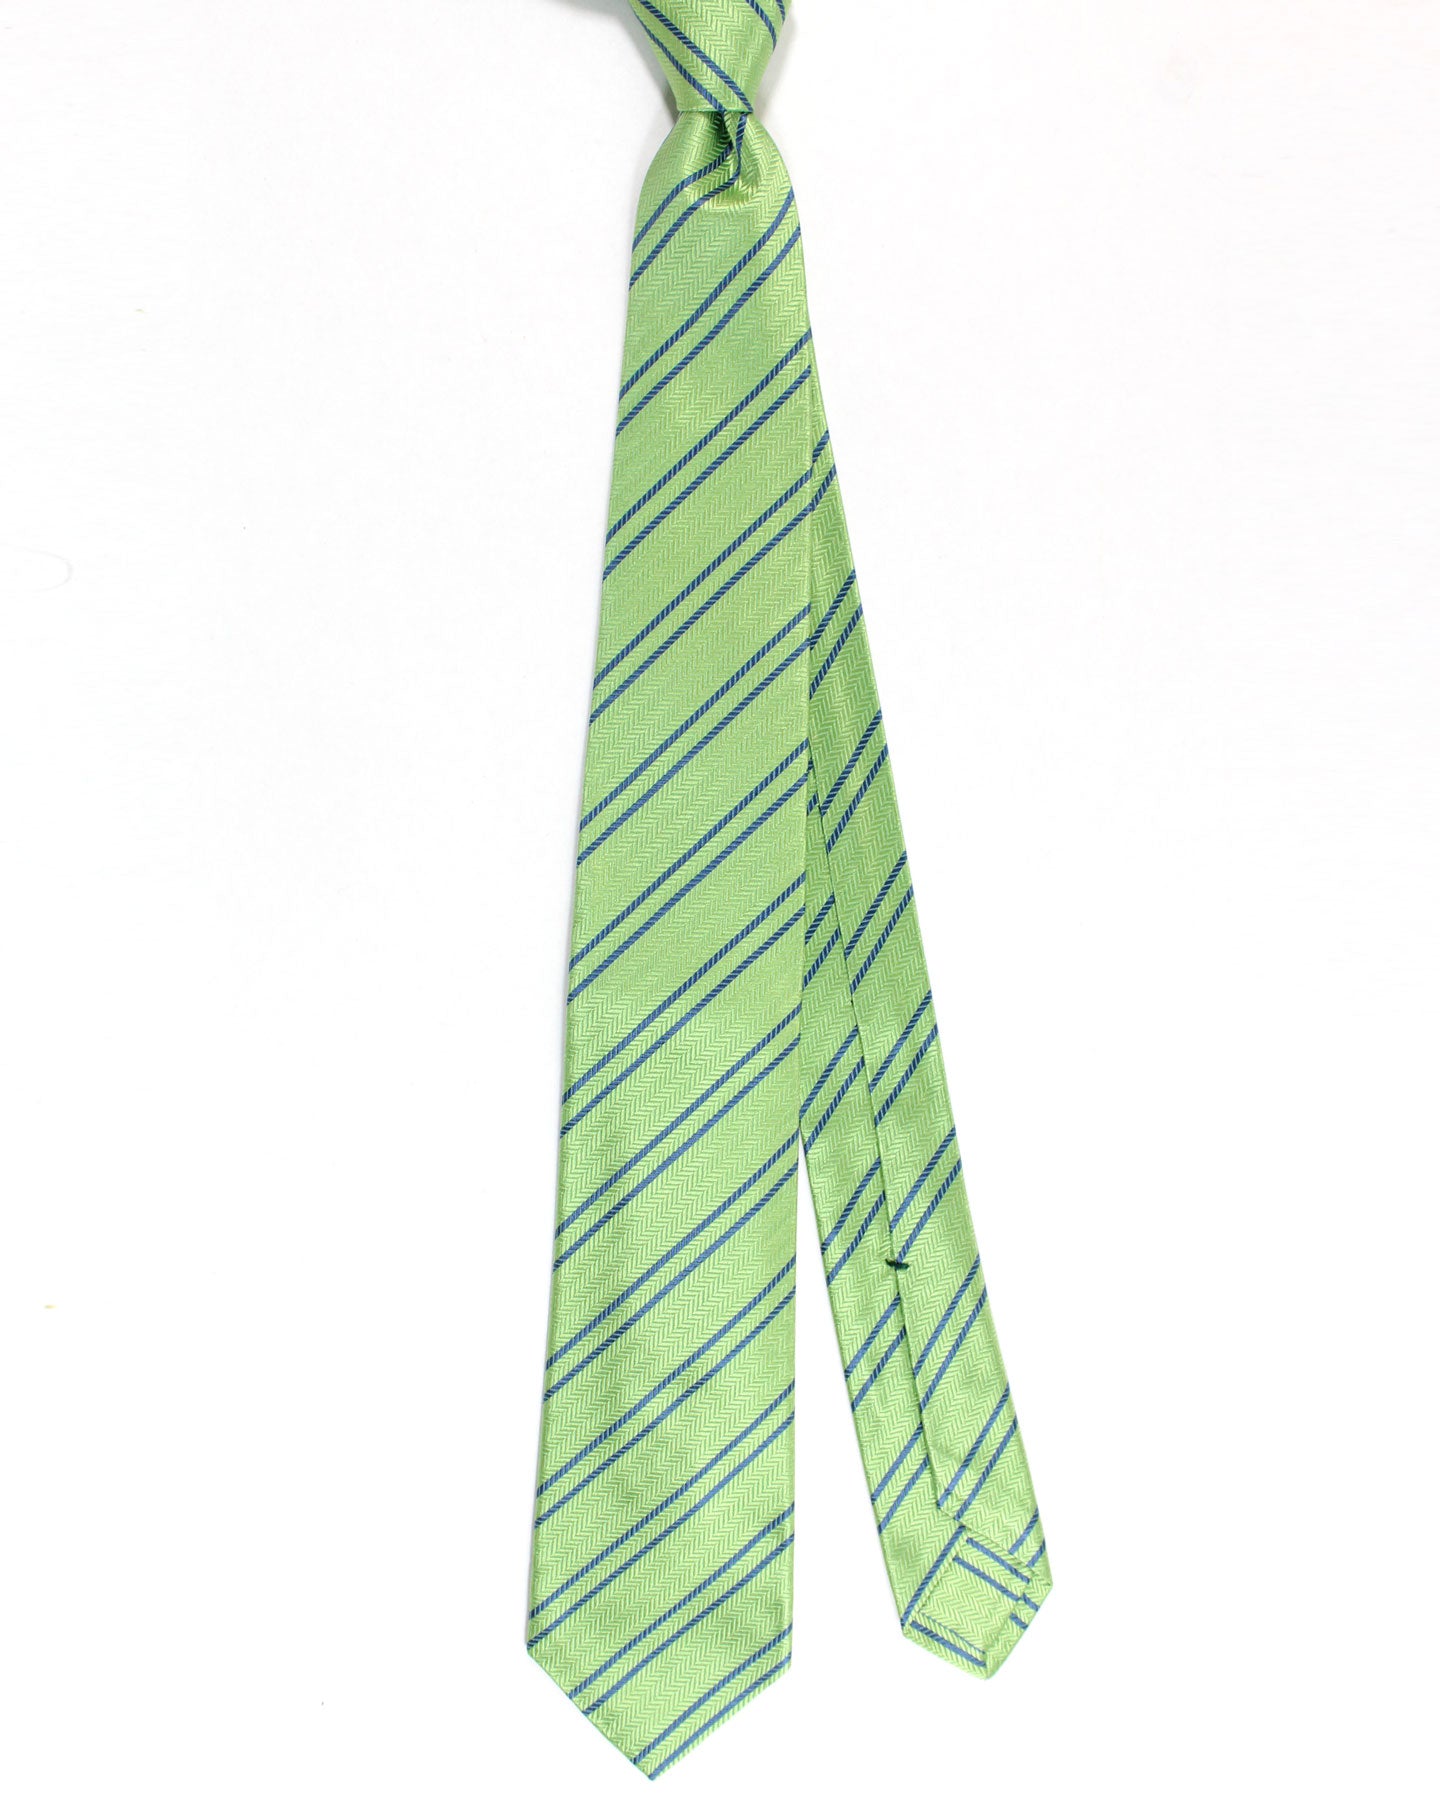 Sartorio Sevenfold Tie Green Royal Blue Stripes Design